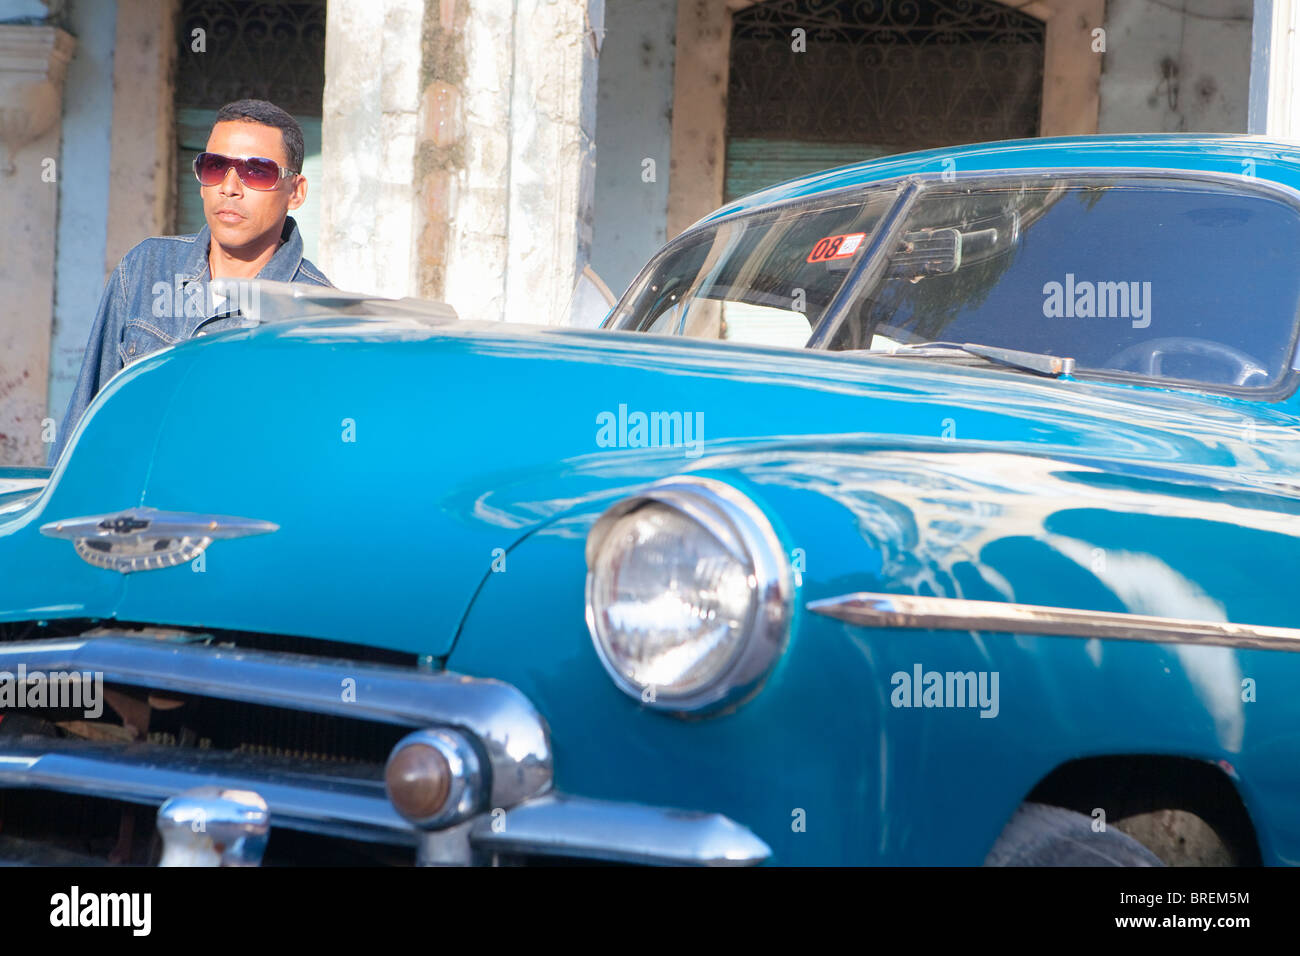 HABANA VIEJA: MAN STOOD WITH CLASSIC AMERICAN CAR Stock Photo